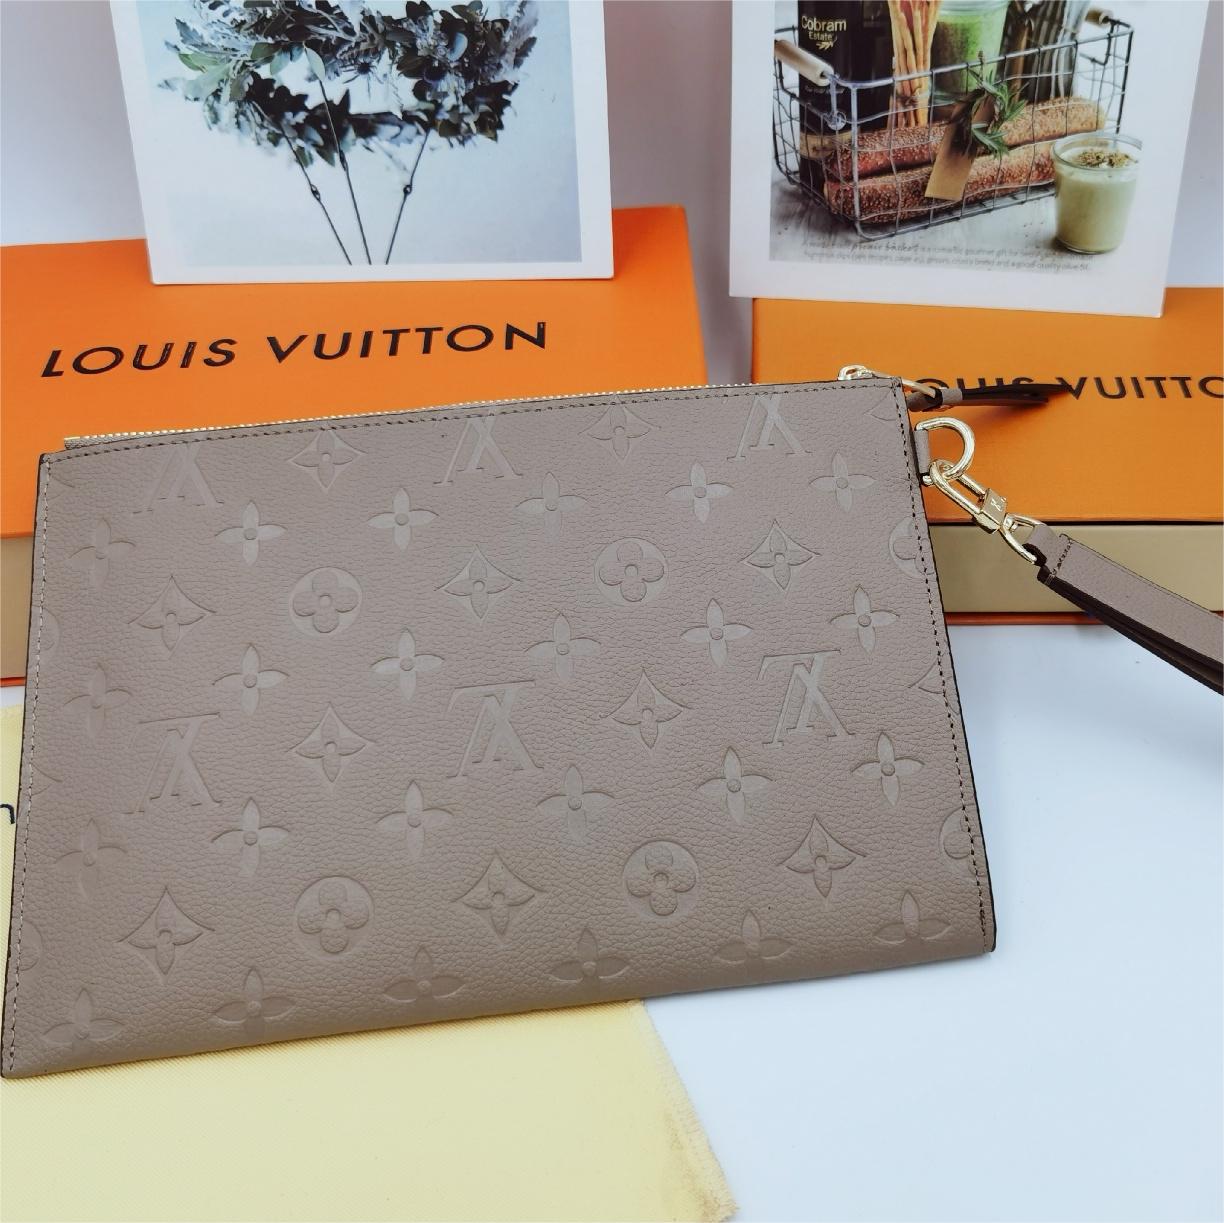 LV Louis Vuitton New Hot Selling Medium Wrist Wallet